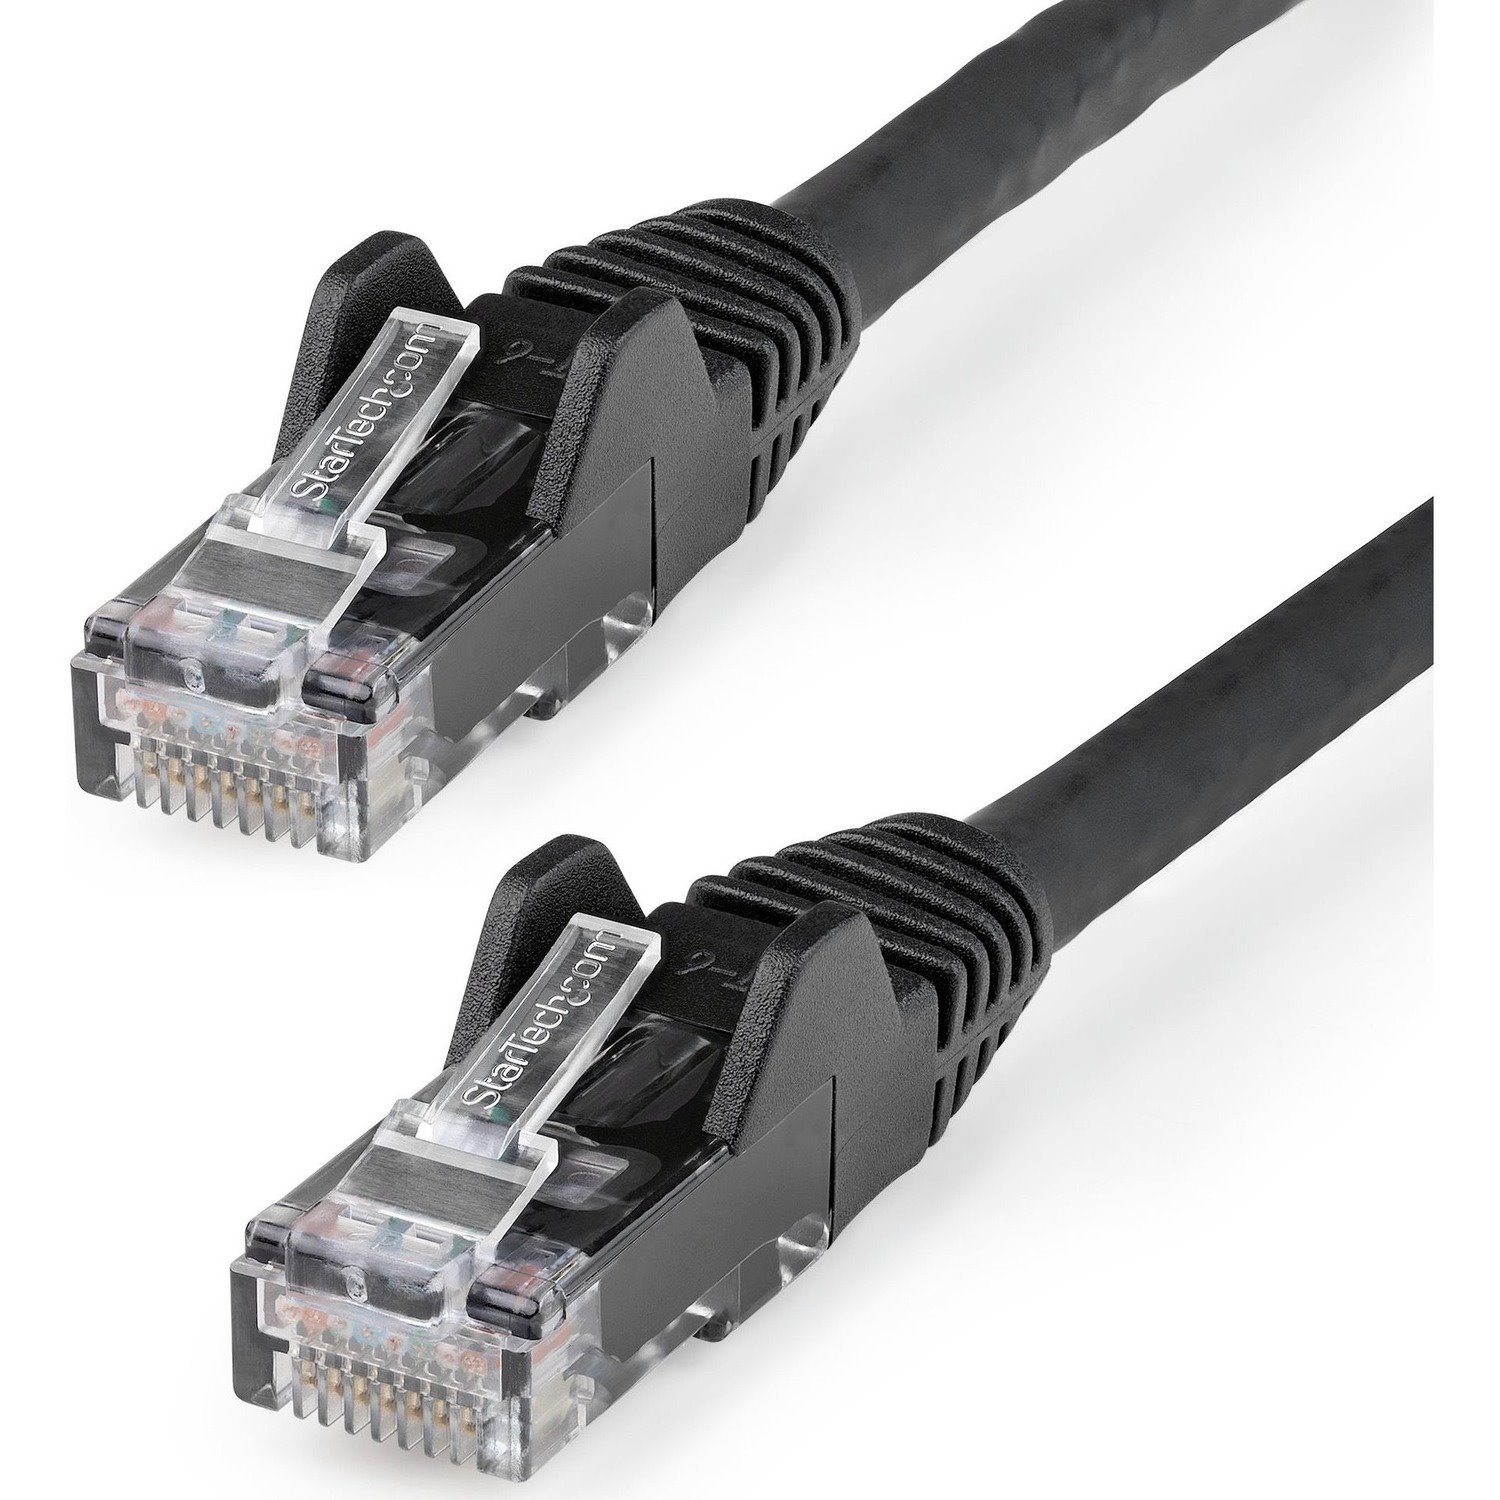 StarTech.com 50cm CAT6 Ethernet Cable, LSZH (Low Smoke Zero Halogen), 10 GbE Snagless 100W PoE UTP RJ45 Black CAT 6 Network Patch Cord ETL